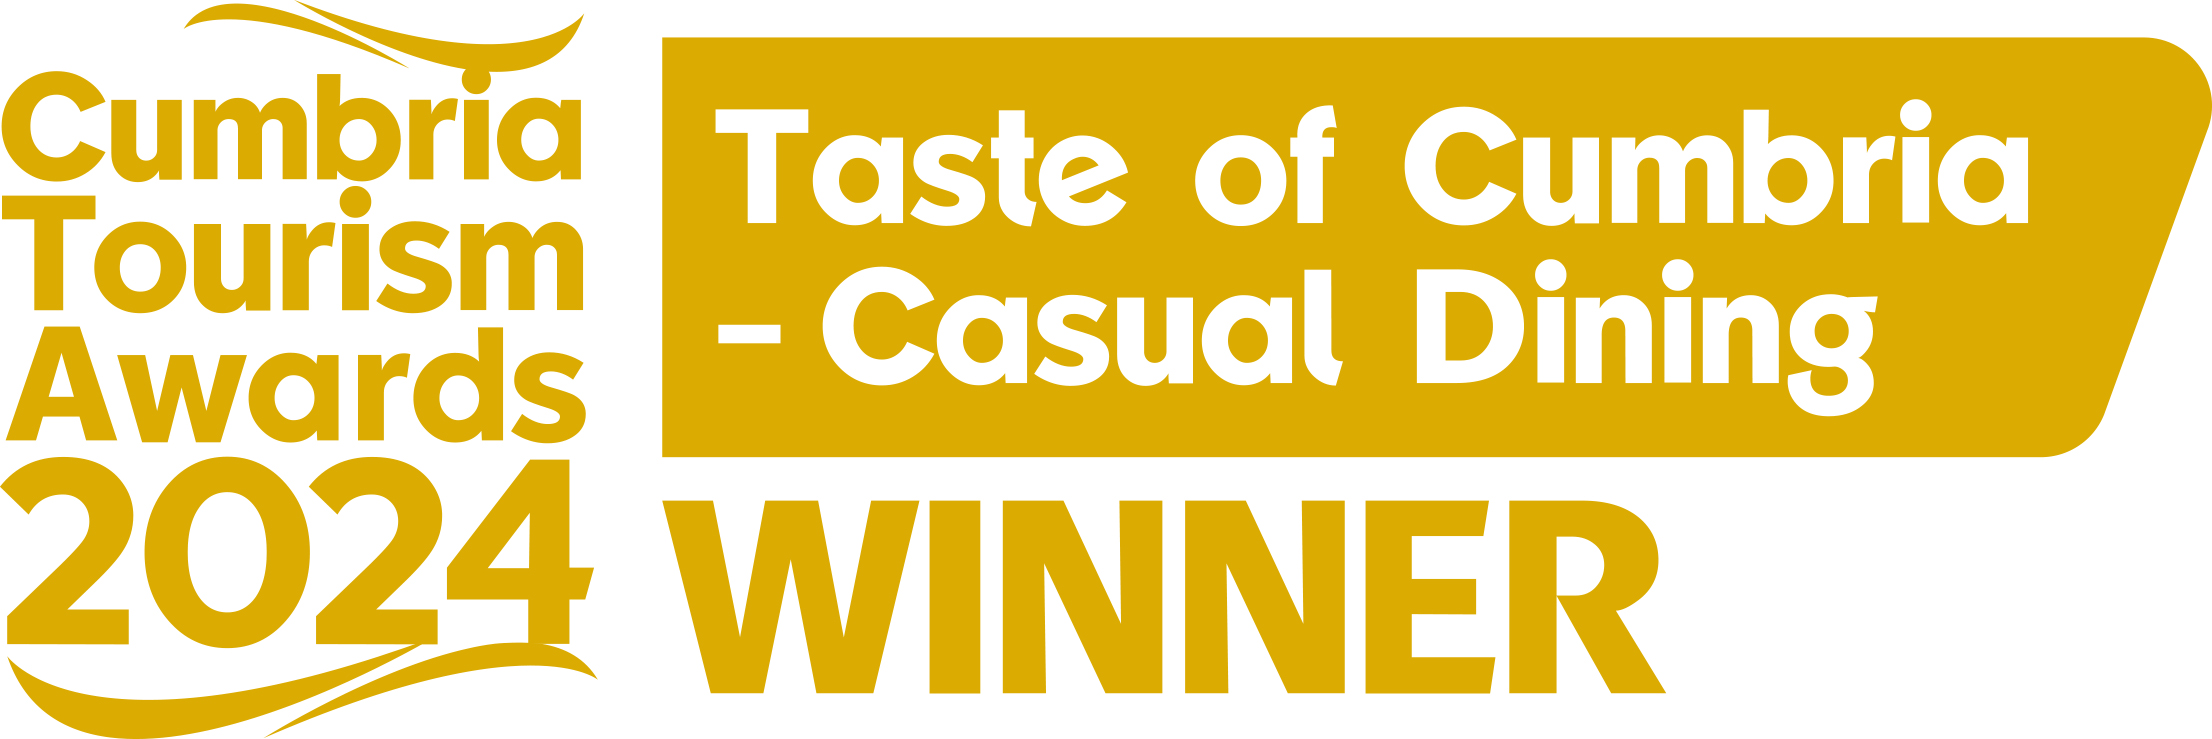 Cumbria Tourism Awards Casual Dining Winner